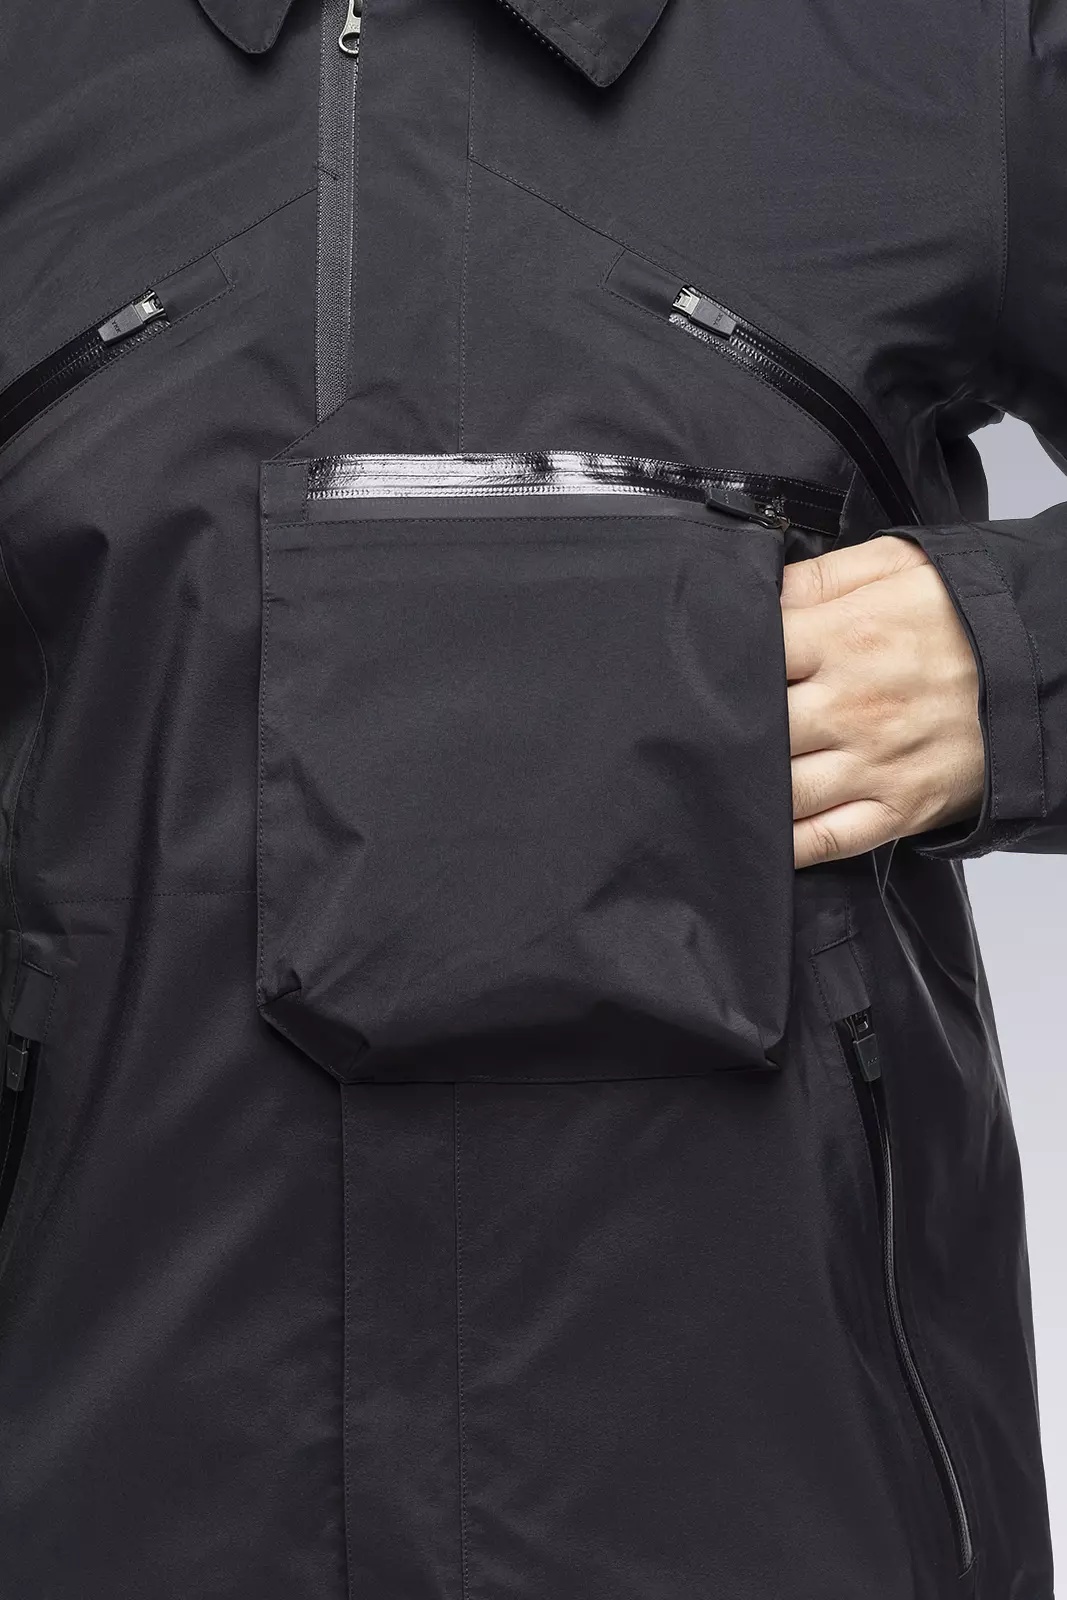 J1A-GTKR-BKS KR EX 3L Gore-Tex® Pro Interops Jacket Black with size 5 WR zippers in gloss black - 26